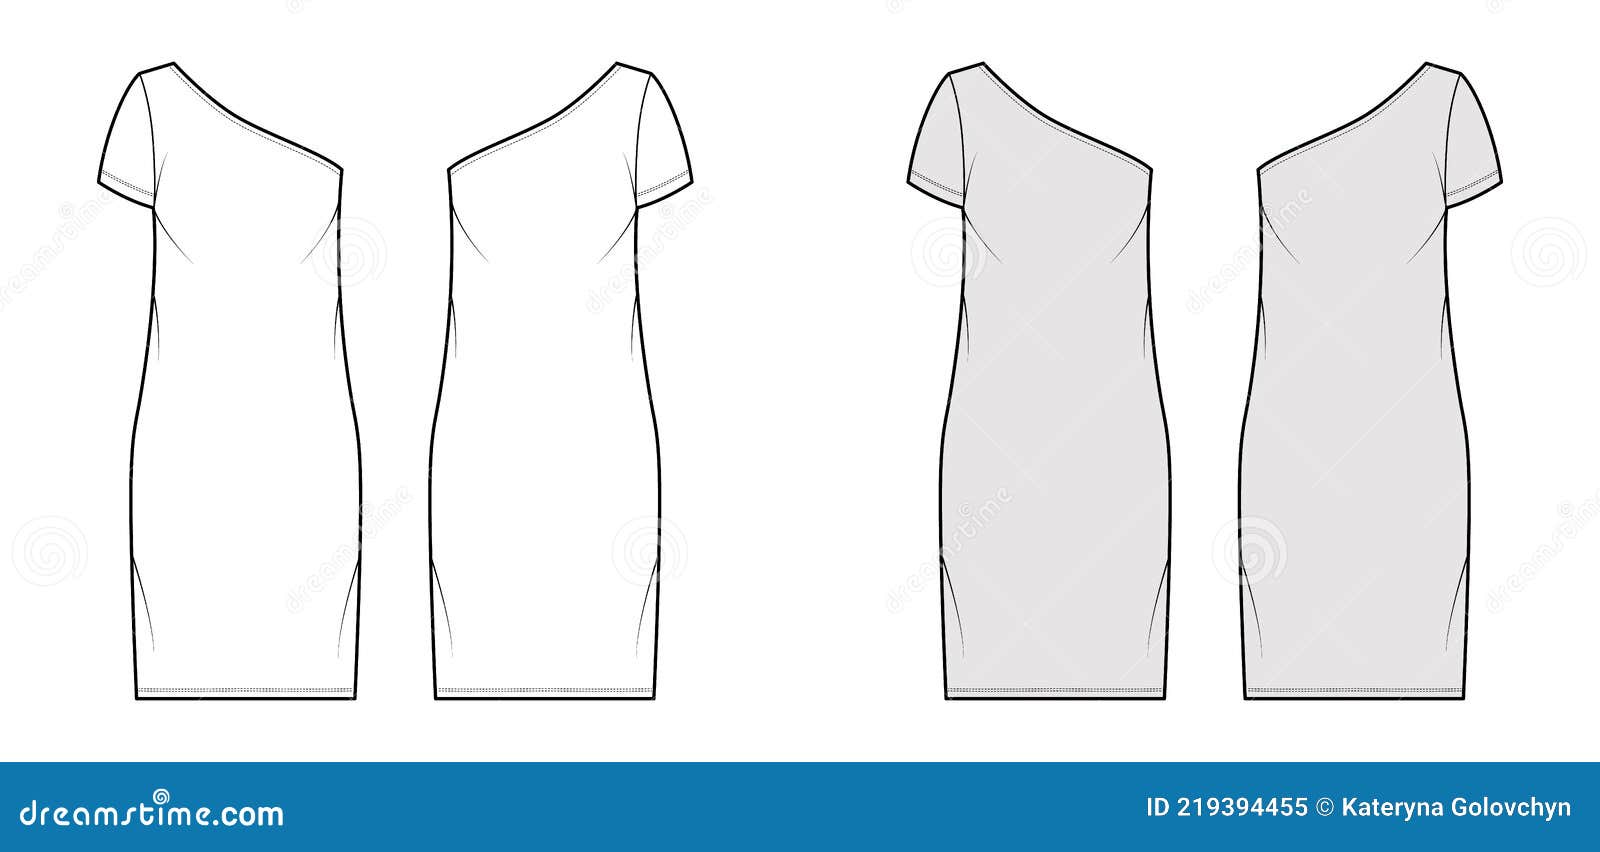 Dress One Shoulder Technical Fashion Illustration with Short Sleeve ...